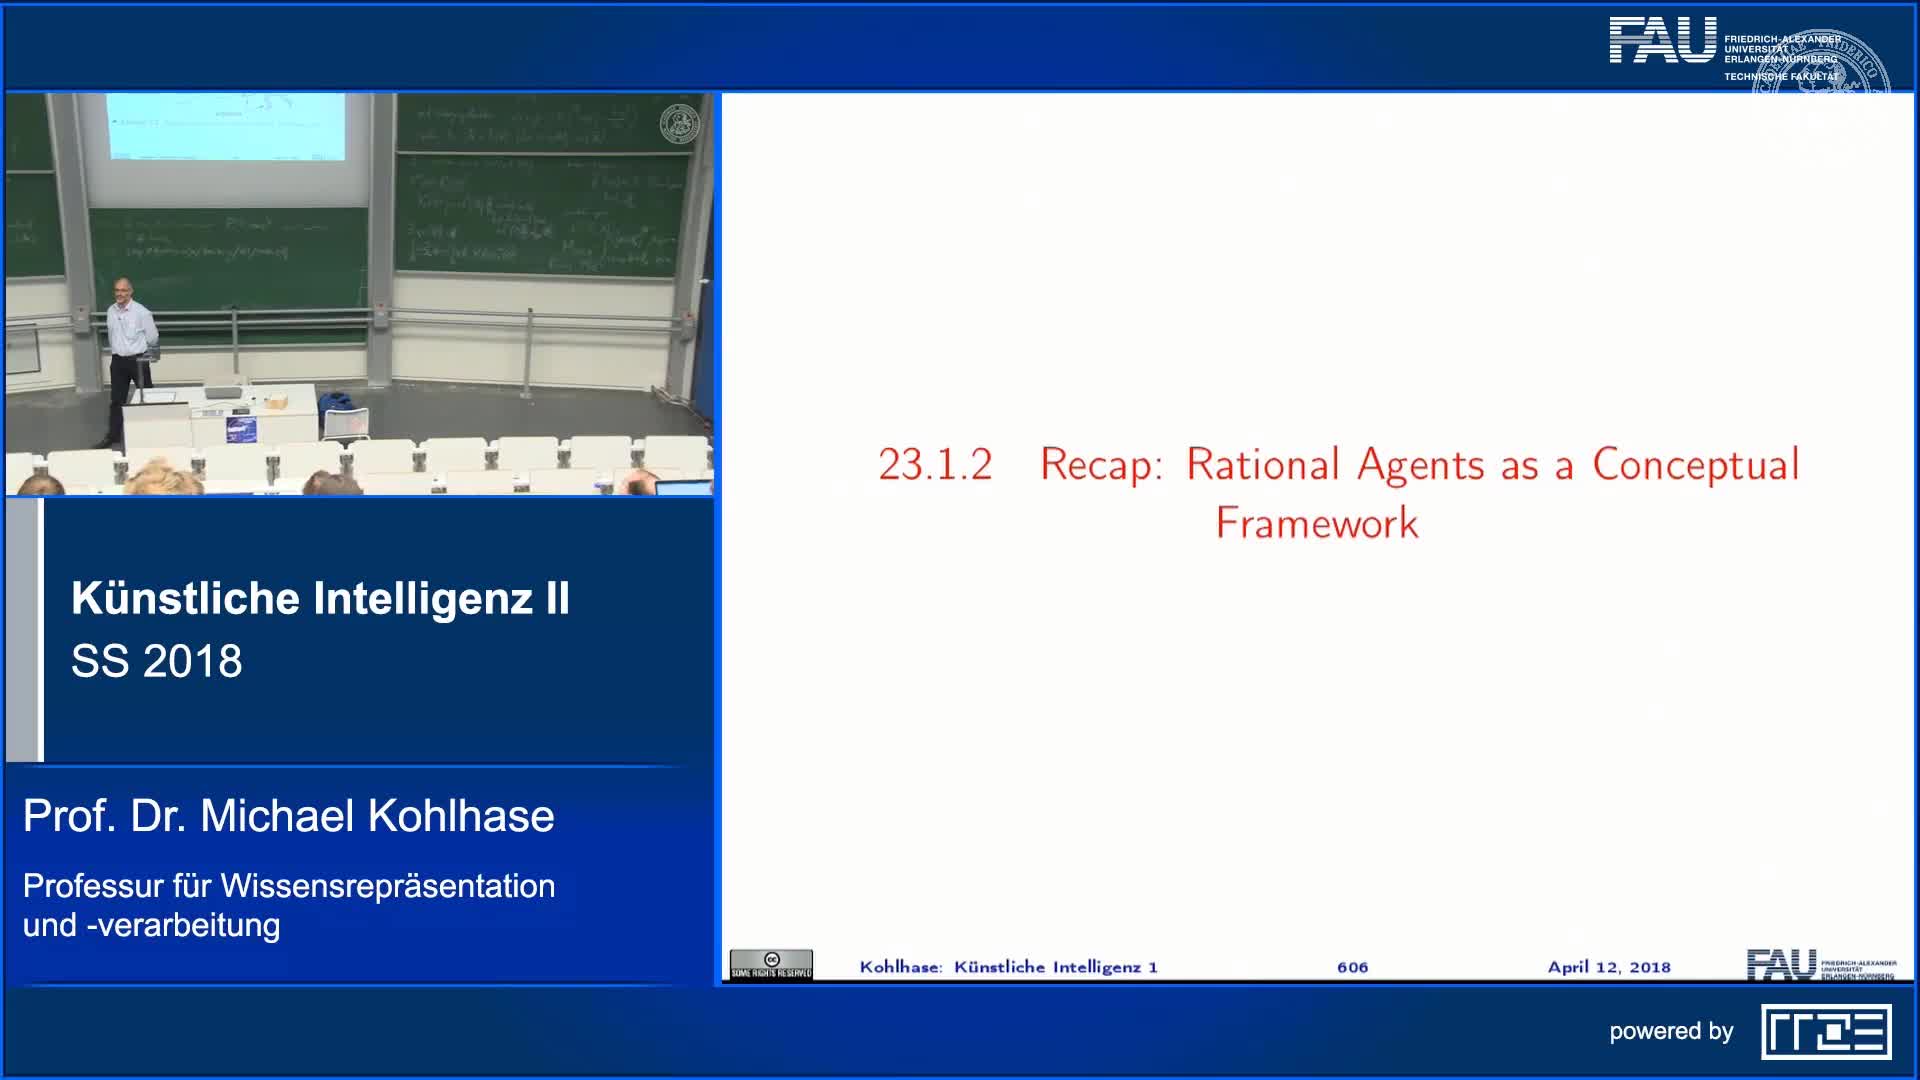 20.1.2. Recap: Rational Agents as a Conceptual Framework preview image